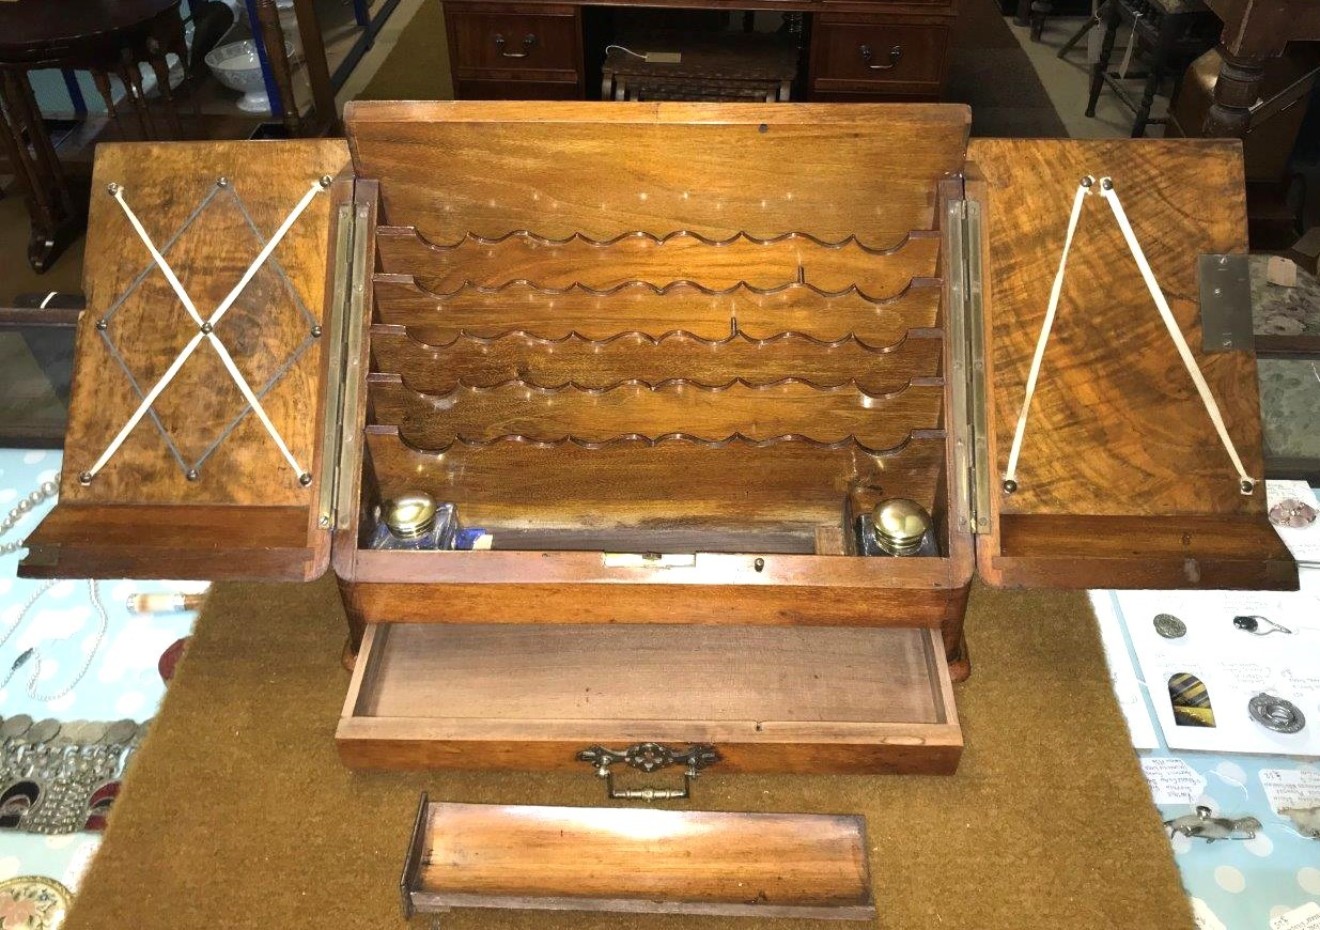 Victorian Walnut Stationery Box